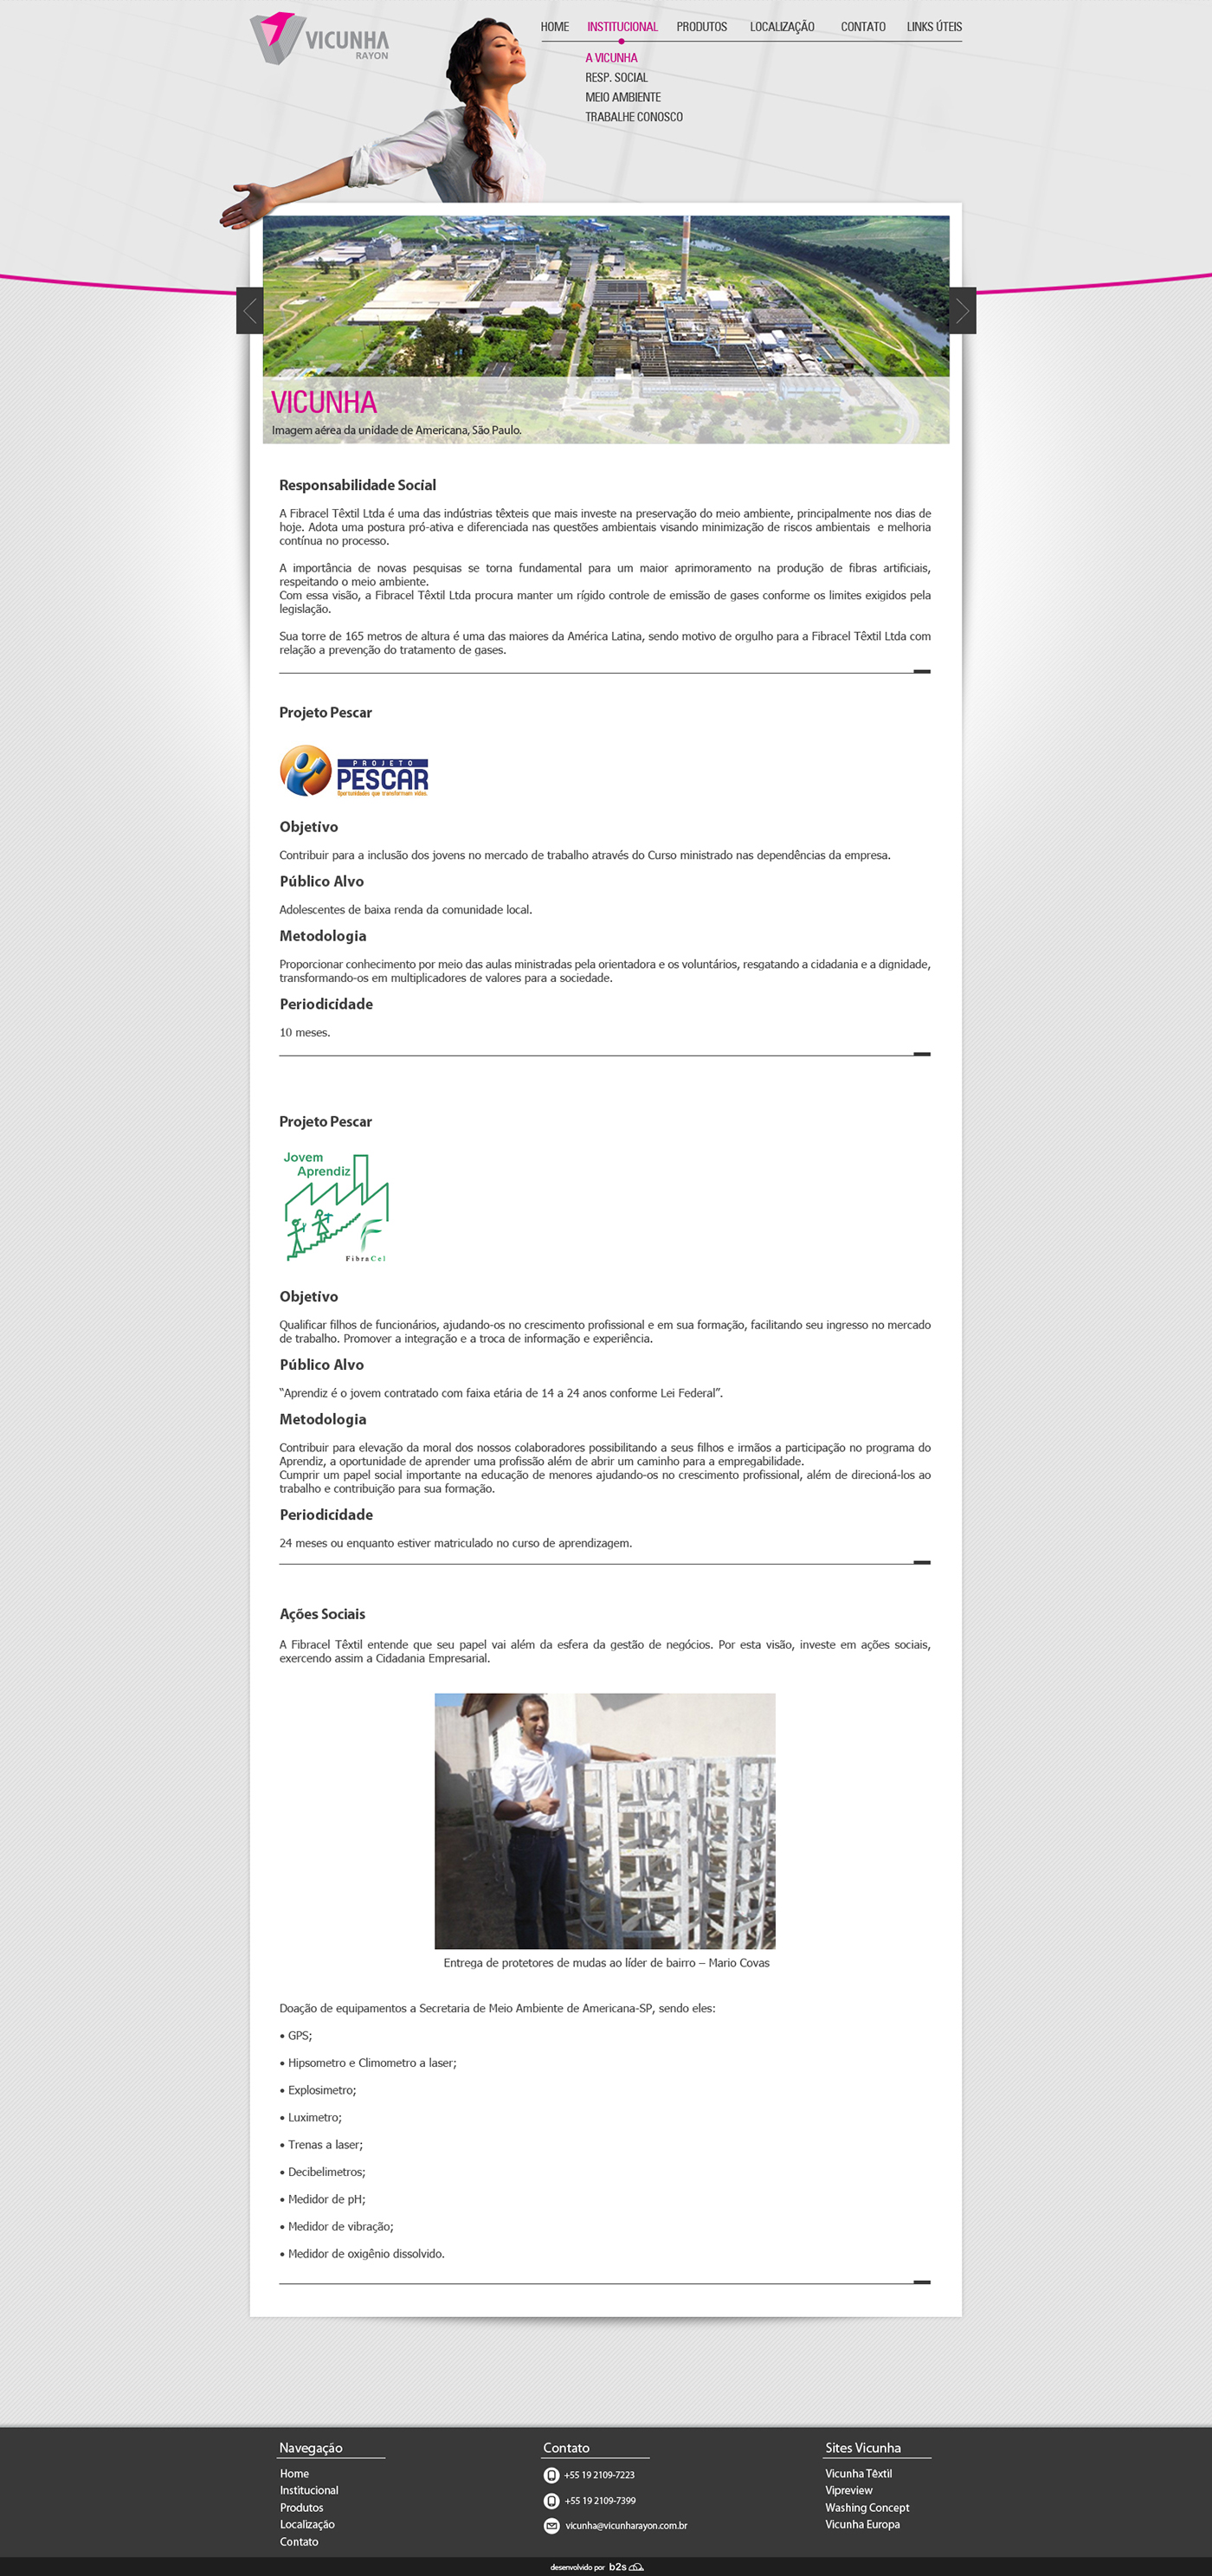 Vicunha rayon enterprise papel fibracel Layout GUI site